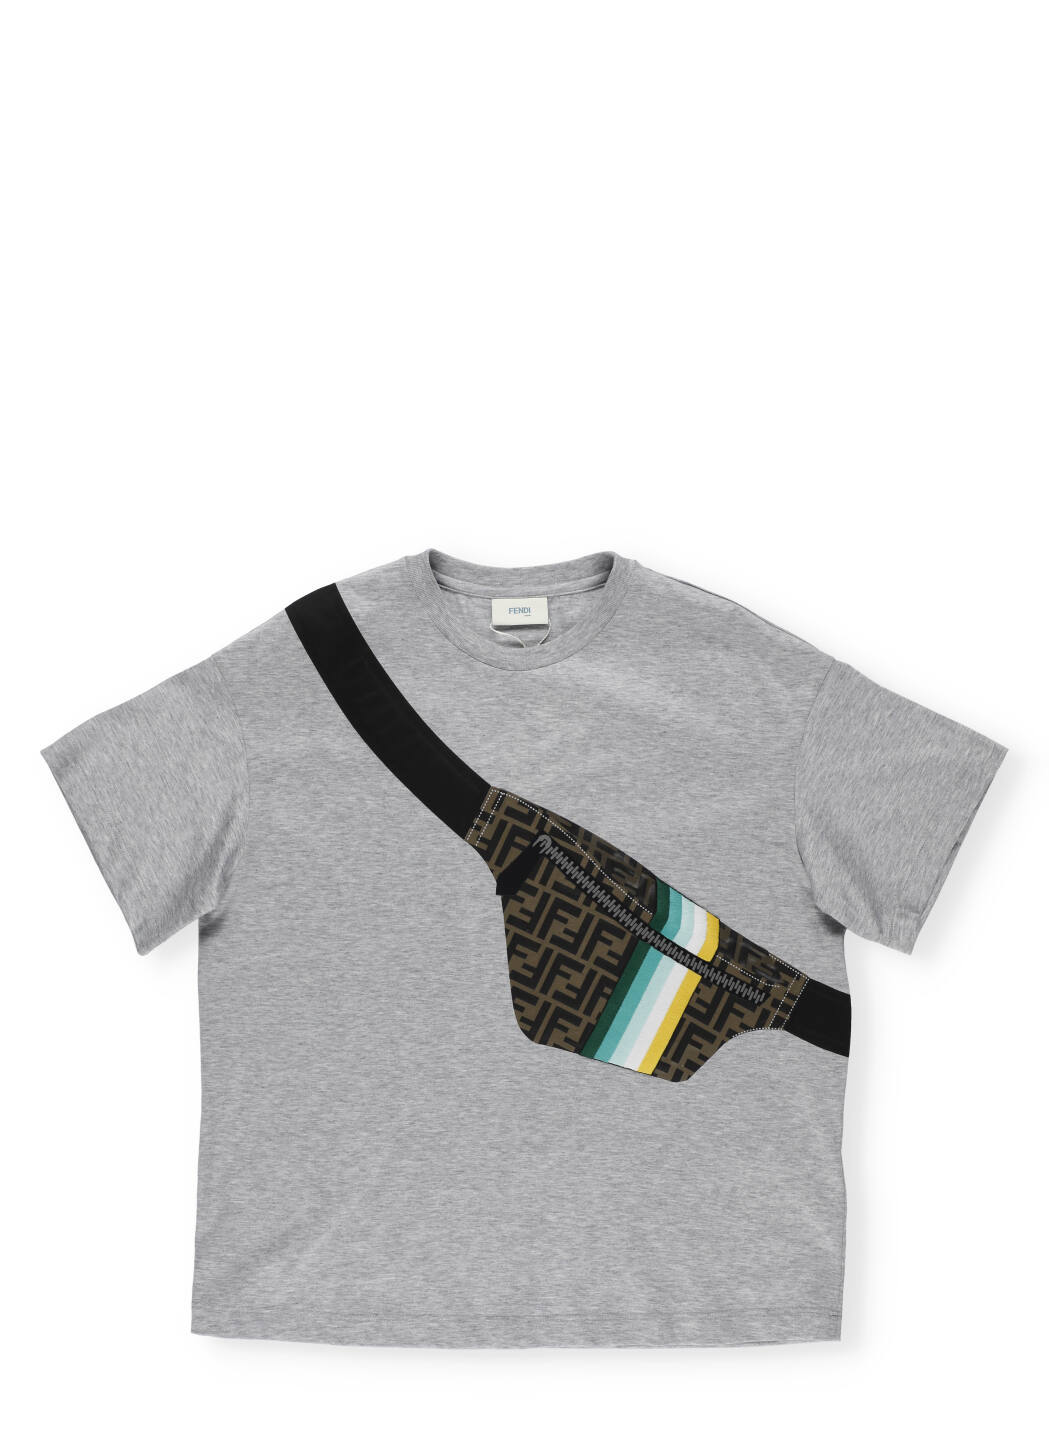 Fendi T-shirt With Beltbag Print